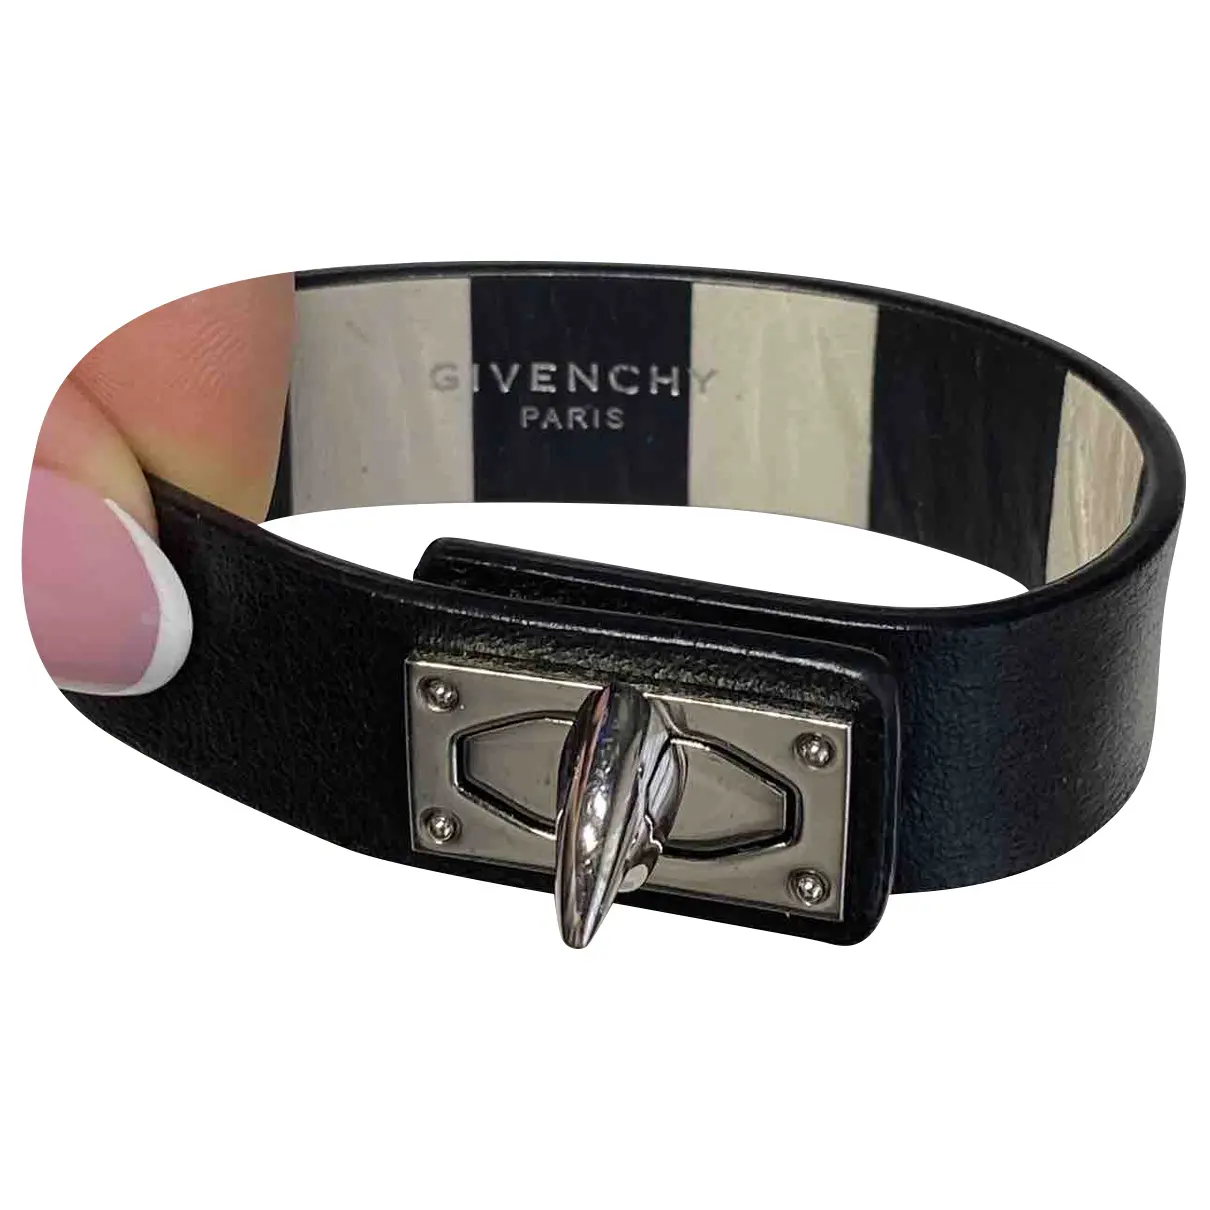 Shark leather bracelet Givenchy